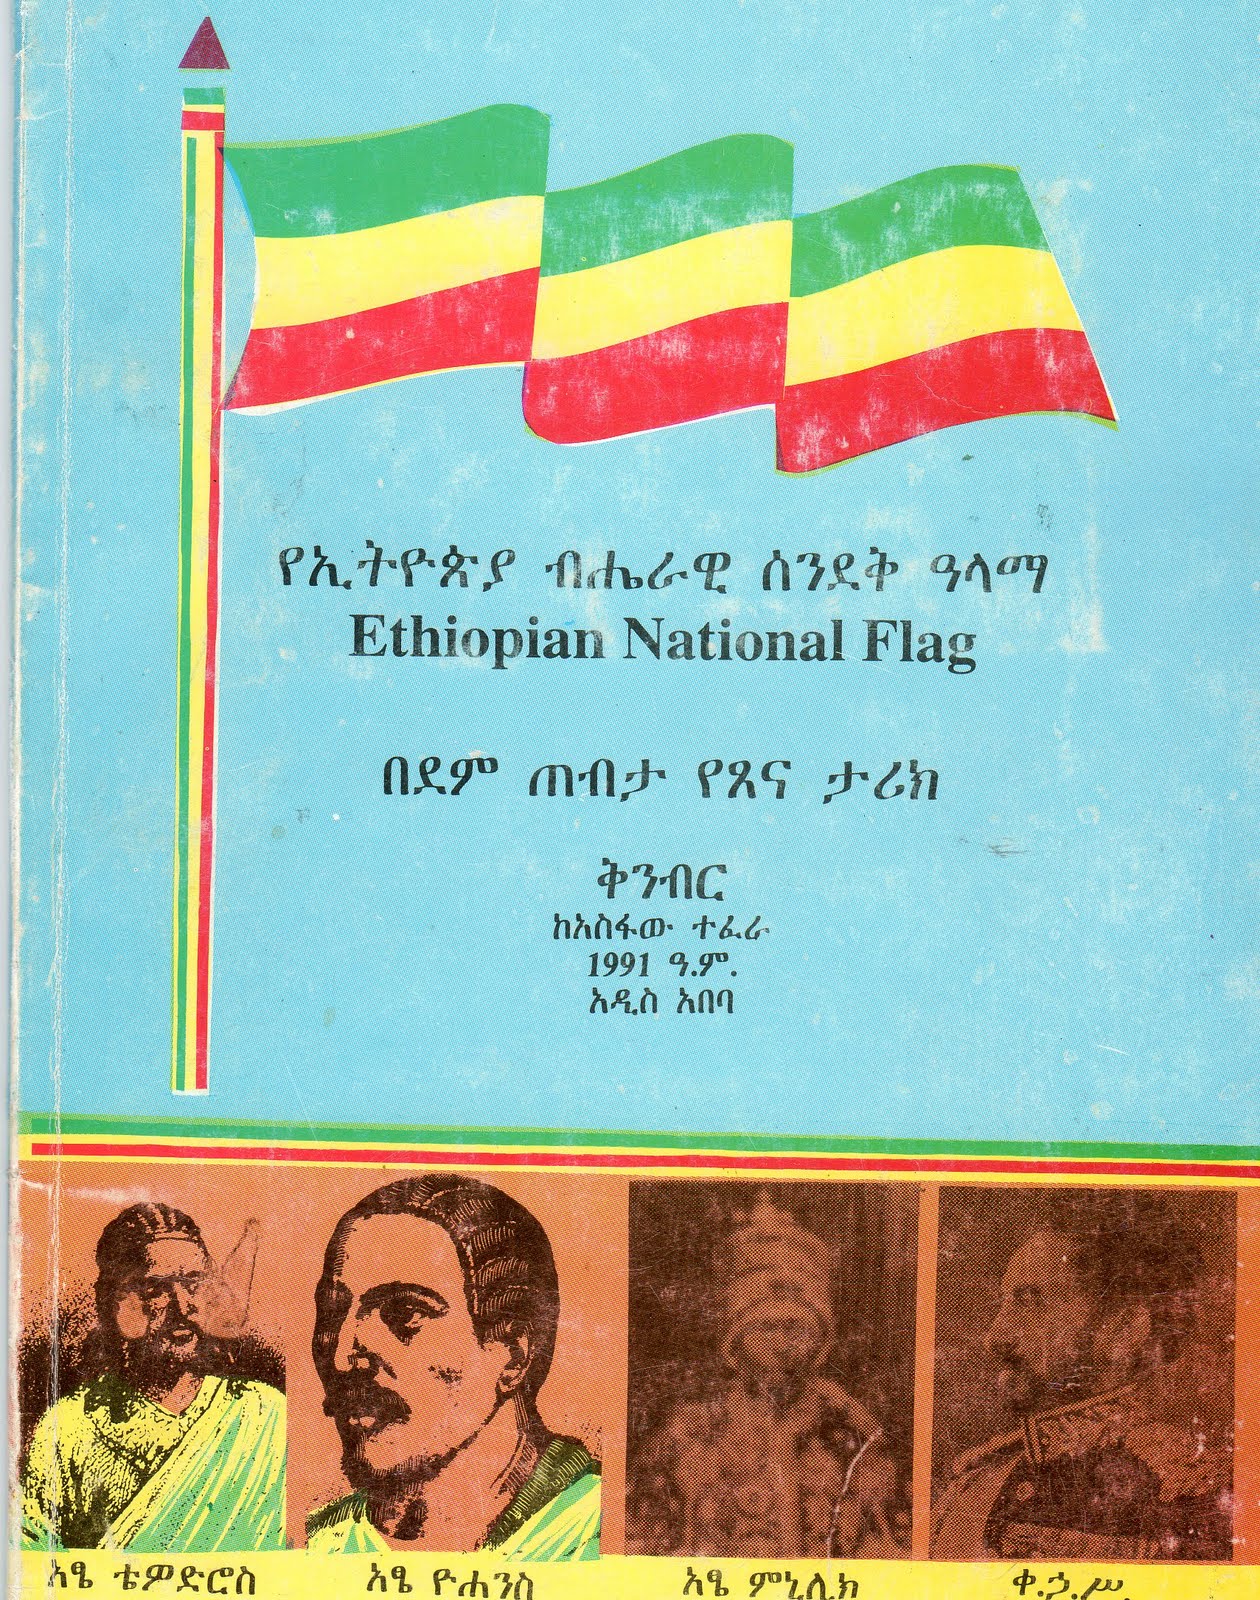 Ethiopedia or Encyclopedia for Ethiopia: The Mysterious Origin of the